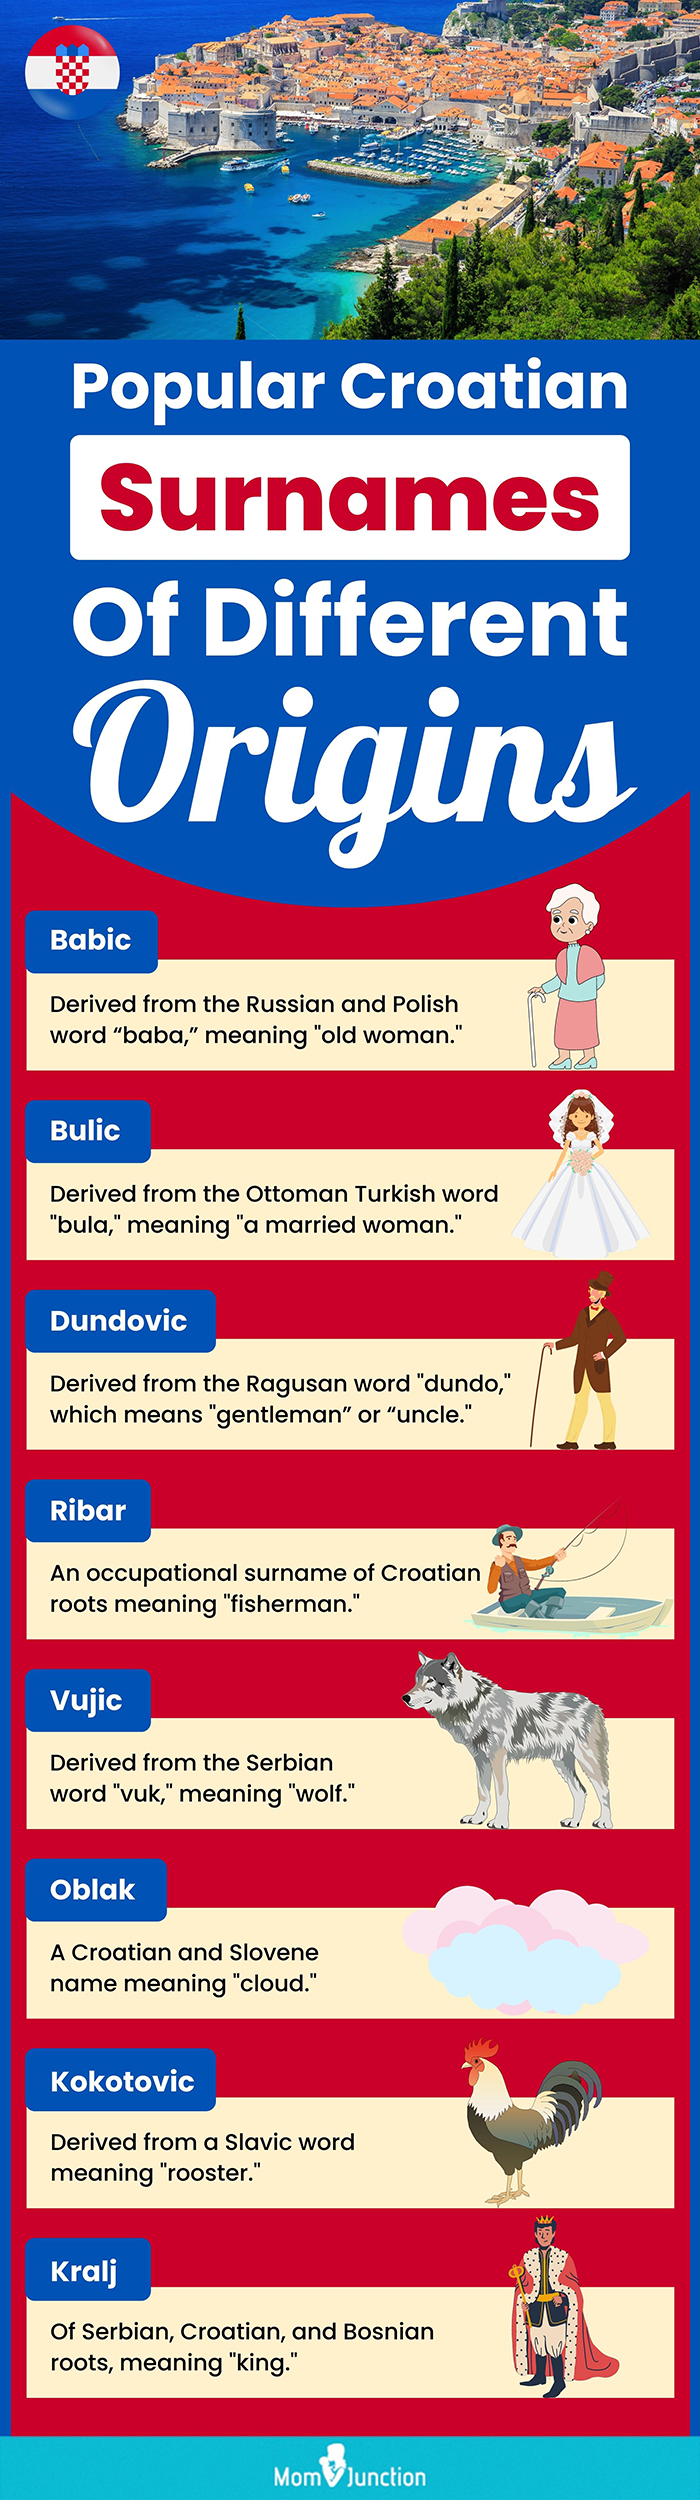 popular croatian surnames of different origins (infographic)